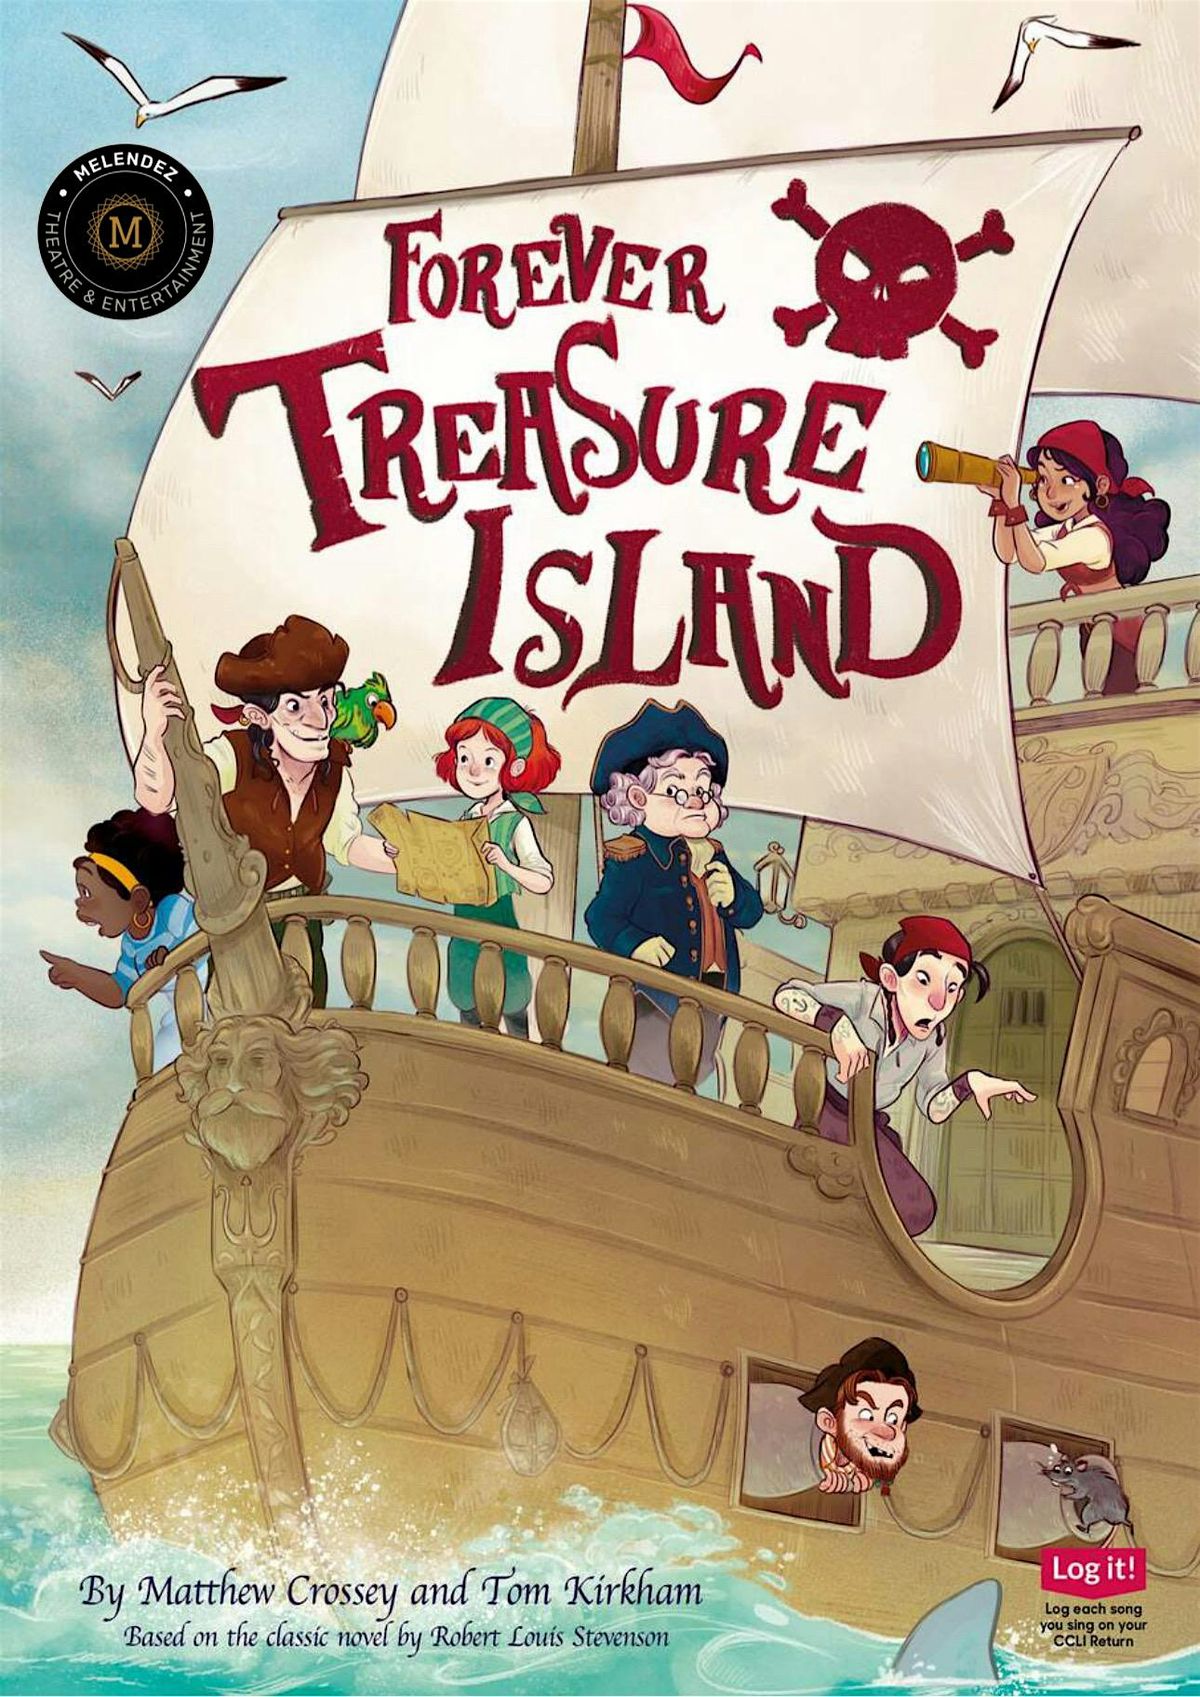 Forever Treasure Island - Musical